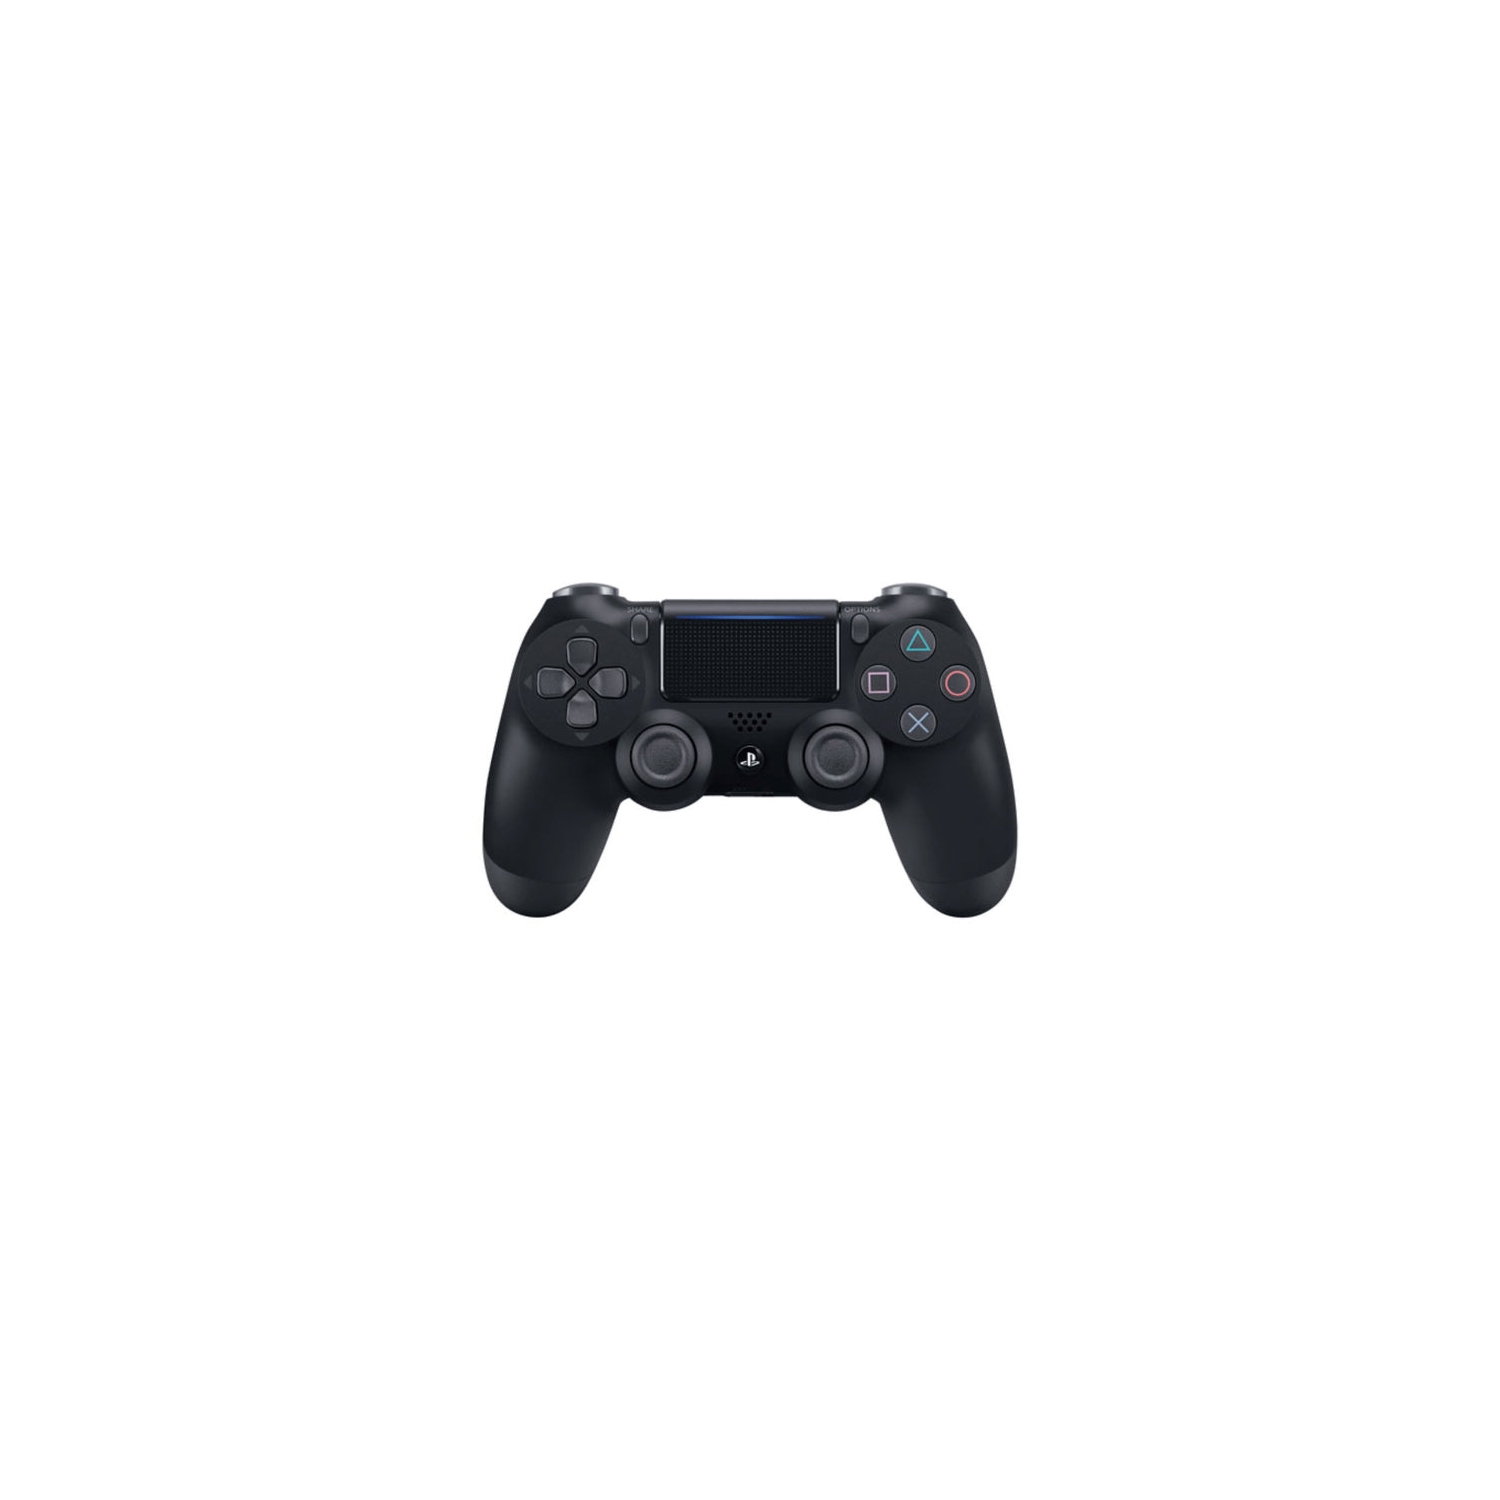 Refurbished (Good) - PlayStation 4 DualShock 4 Wireless Controller - Black